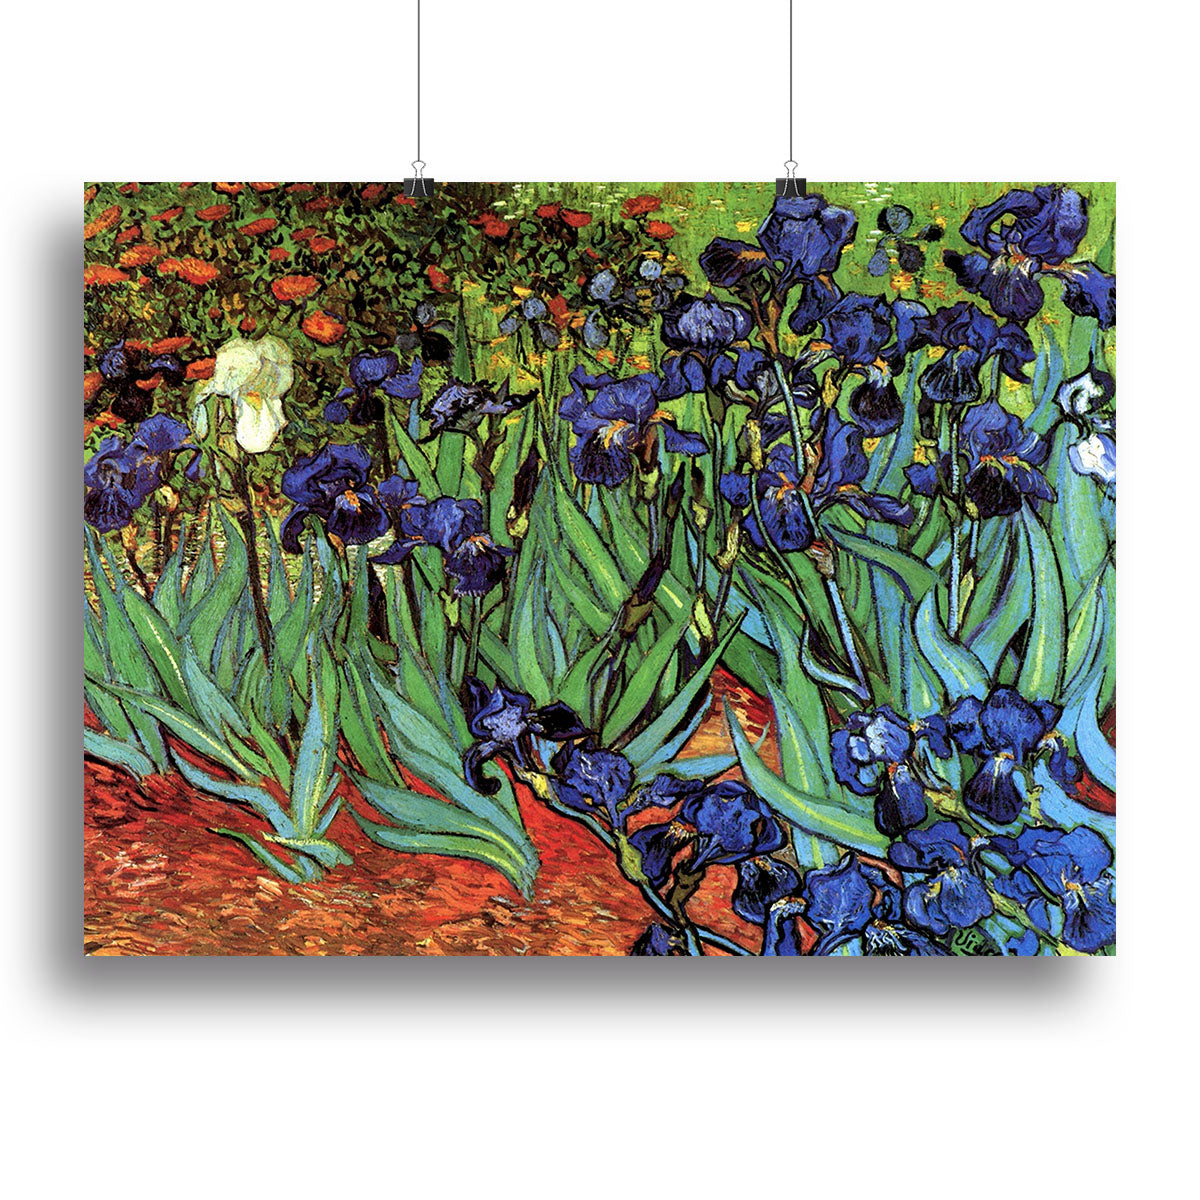 Irises 2 by Van Gogh Canvas Print or Poster - Canvas Art Rocks - 2